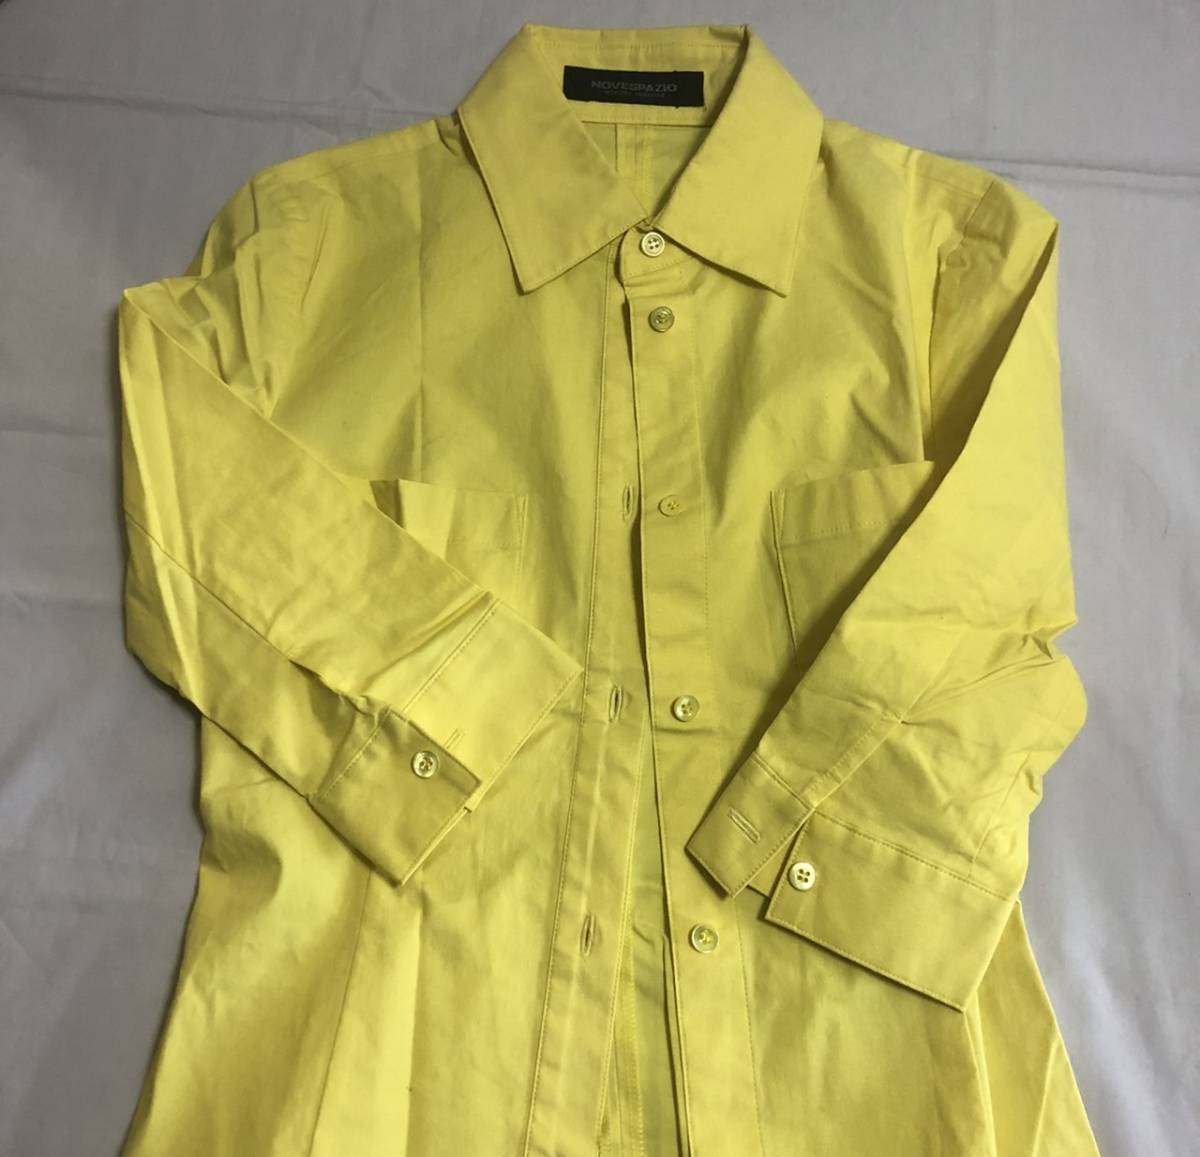  бесплатная доставка!NOVESPAZIO Novesrazio блуза рубашка 7 минут рукав лимон желтый 